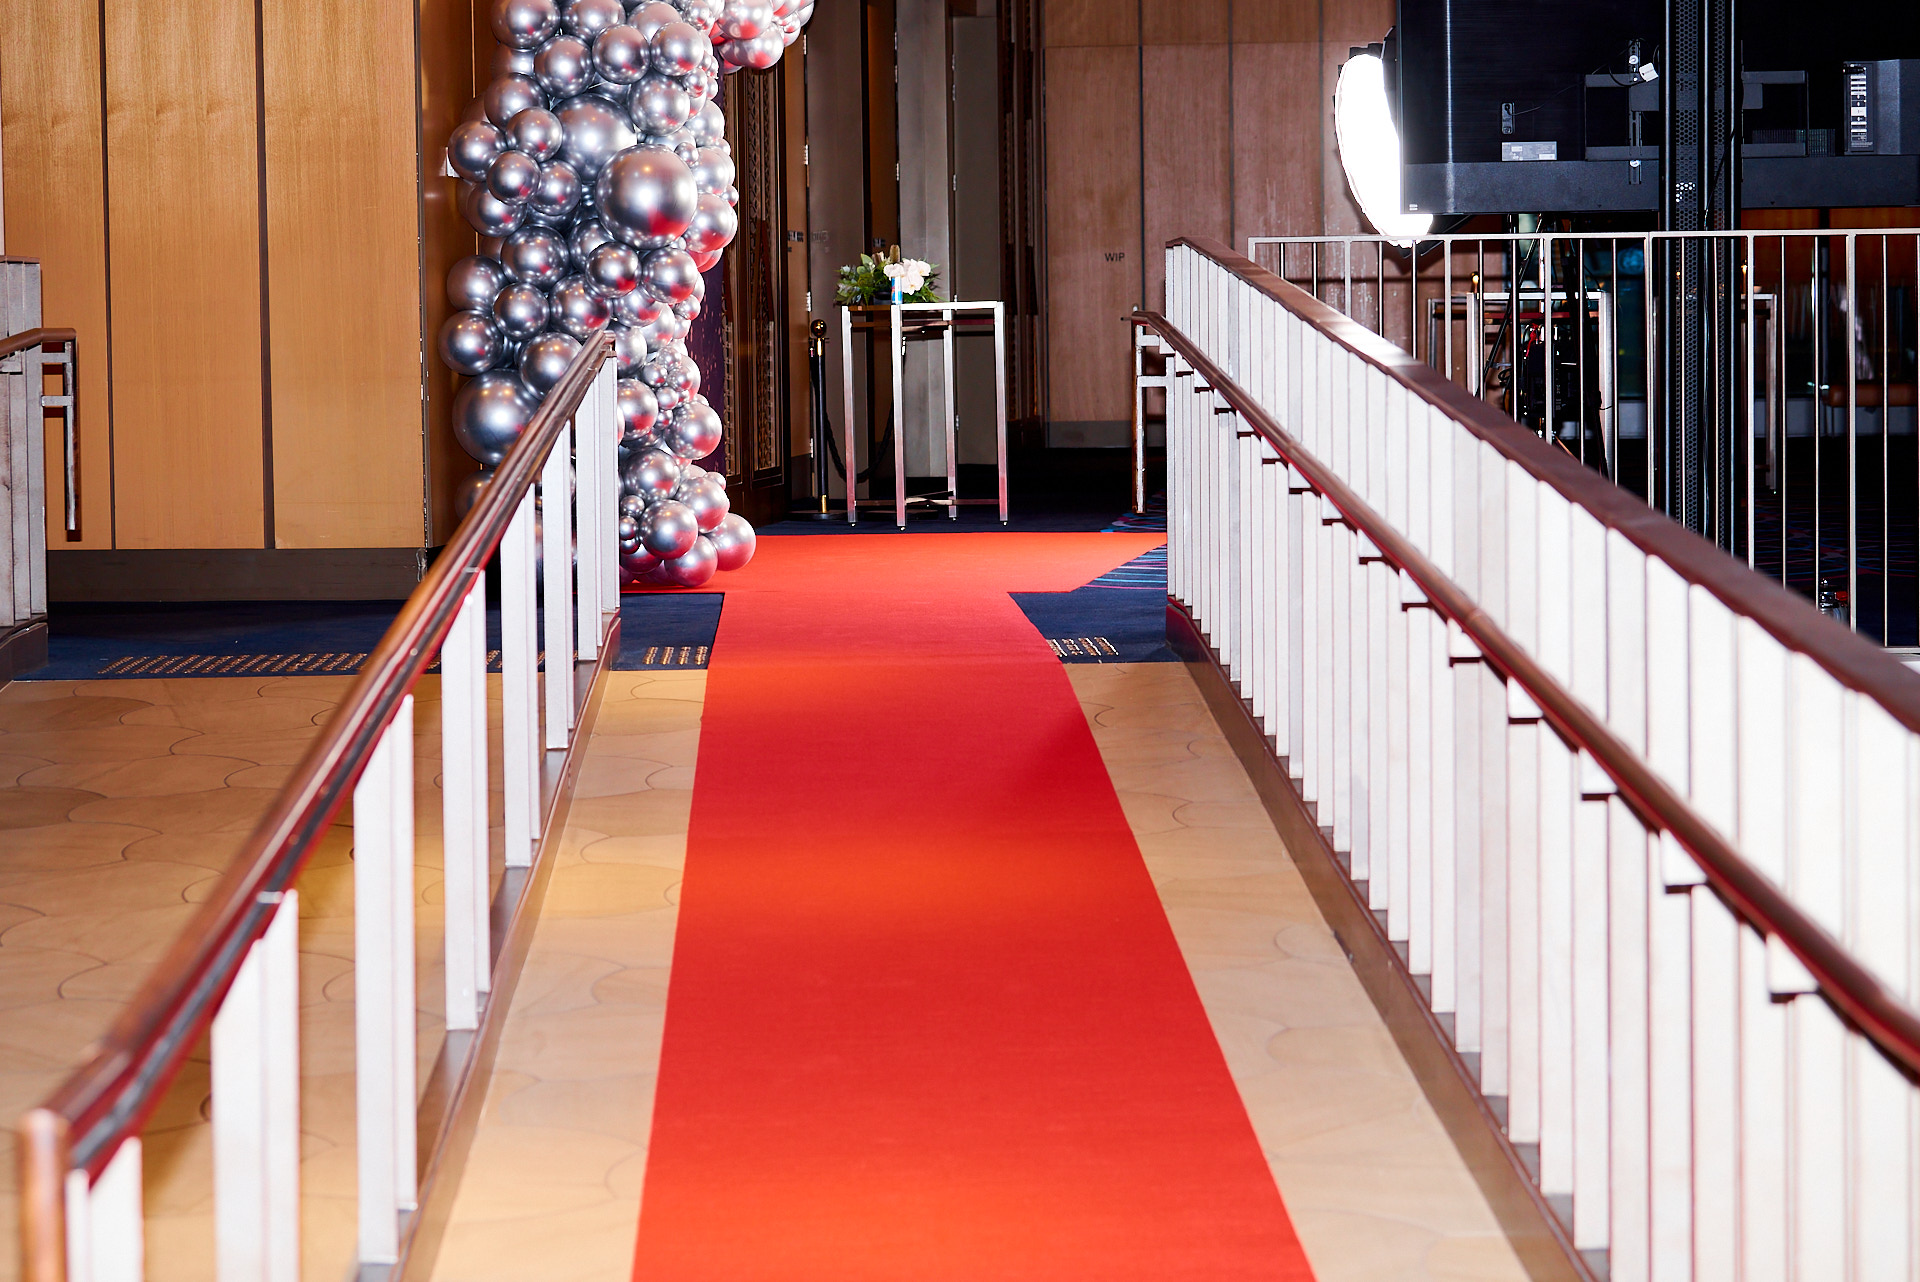 Red Carpet Event Creative Services Sydney Australia. By Orlando Sydney Photography. 